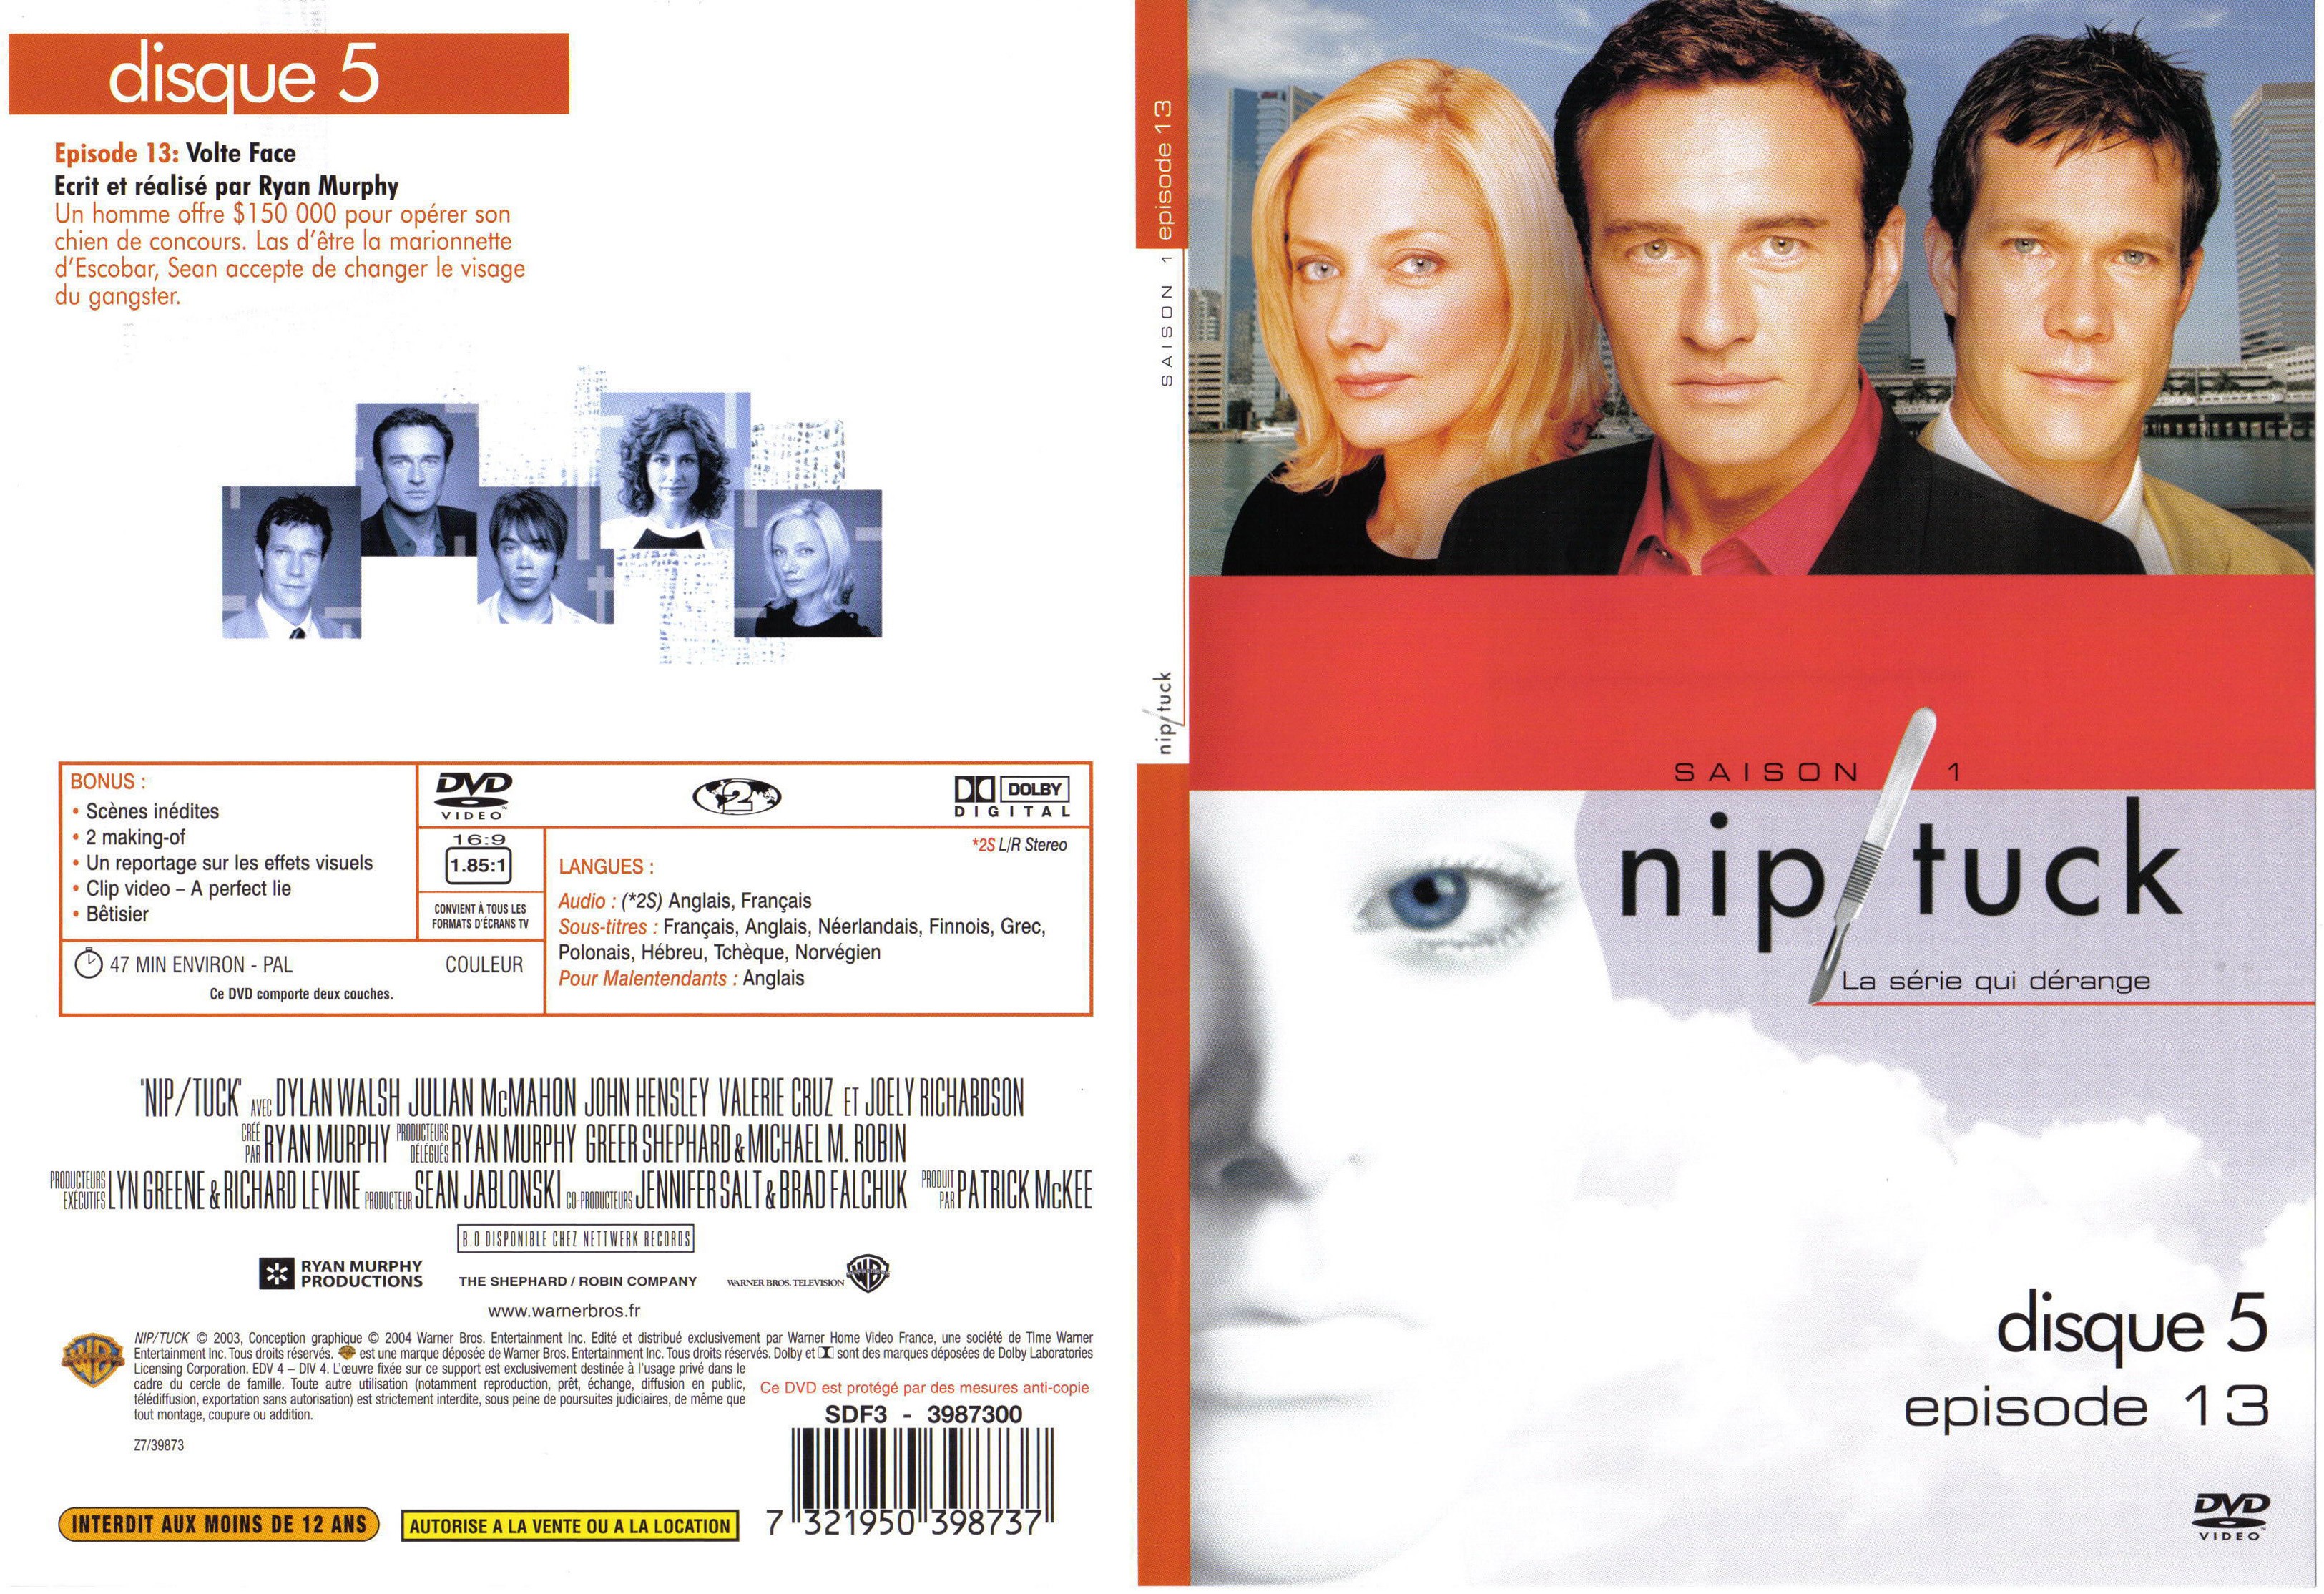 Jaquette DVD Nip-Tuck saison 1 dvd 5